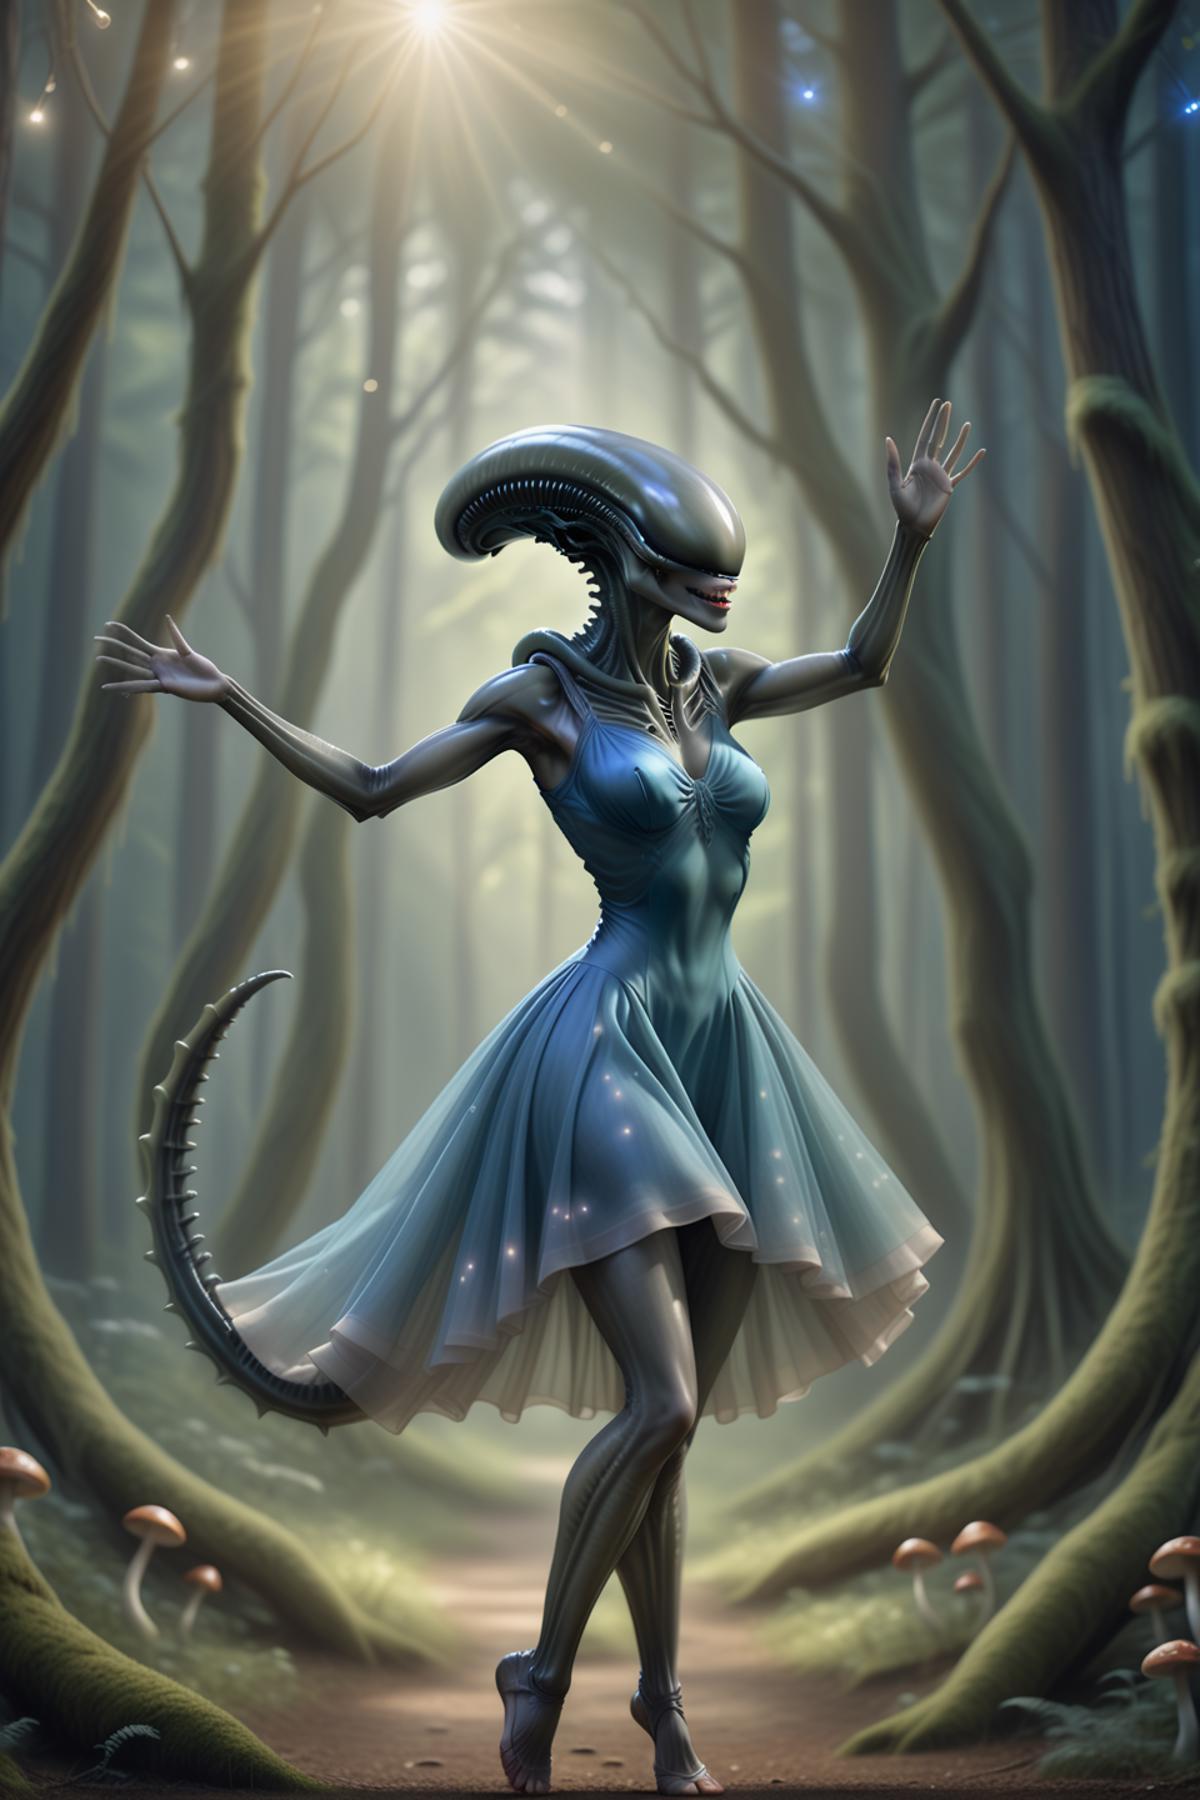 Female Xenomorph - Alien Woman image by Catalorian